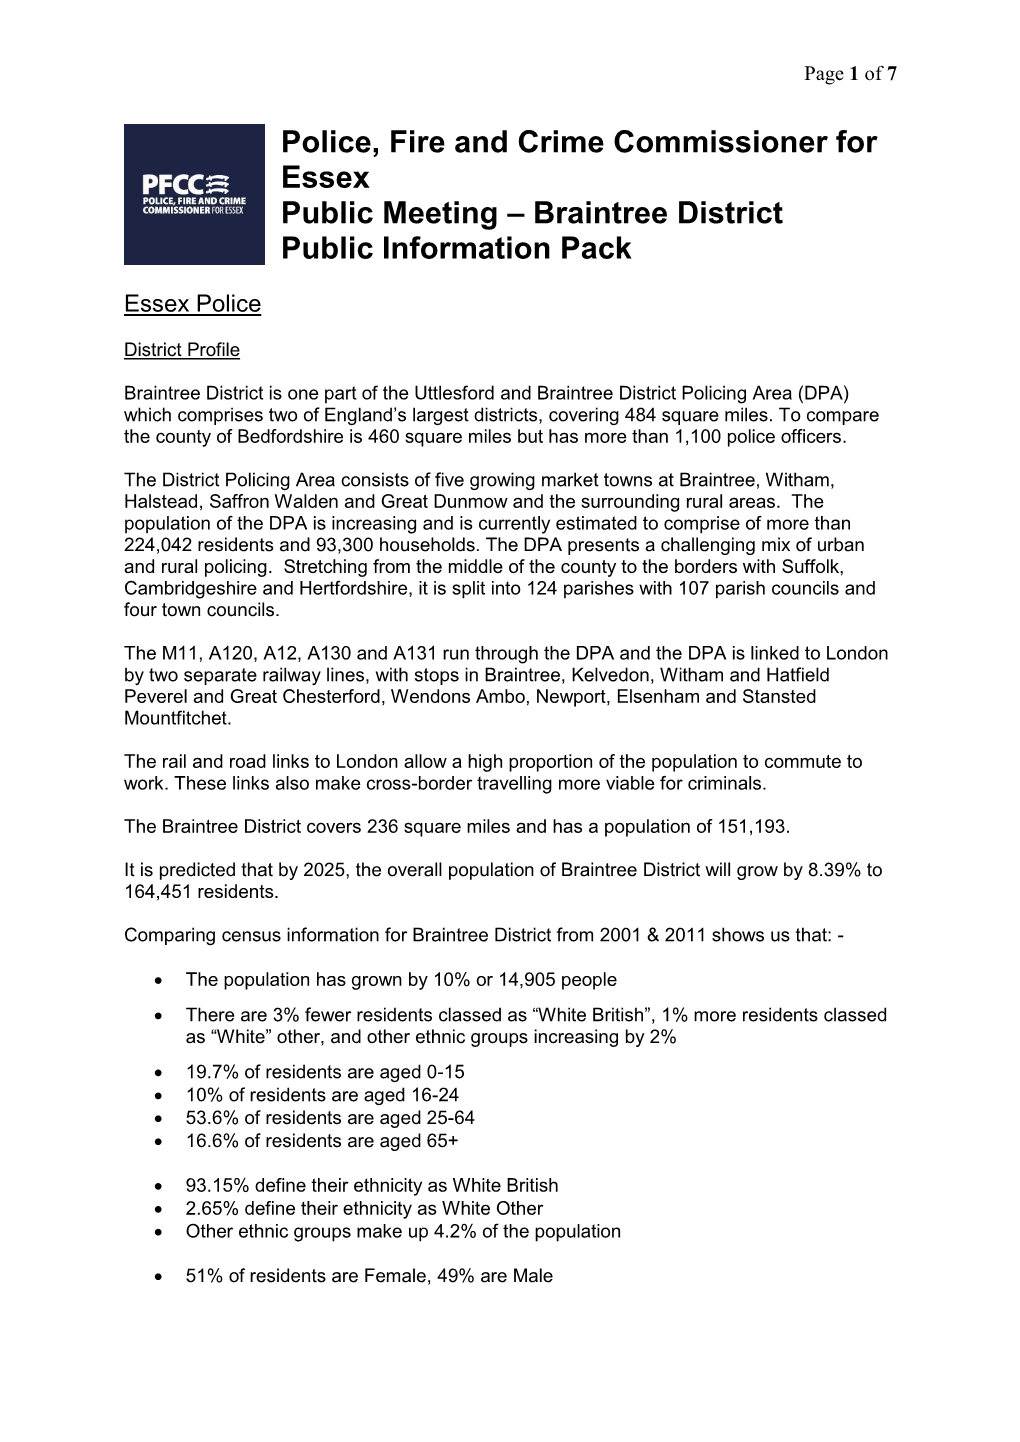 Braintree District Public Information Pack